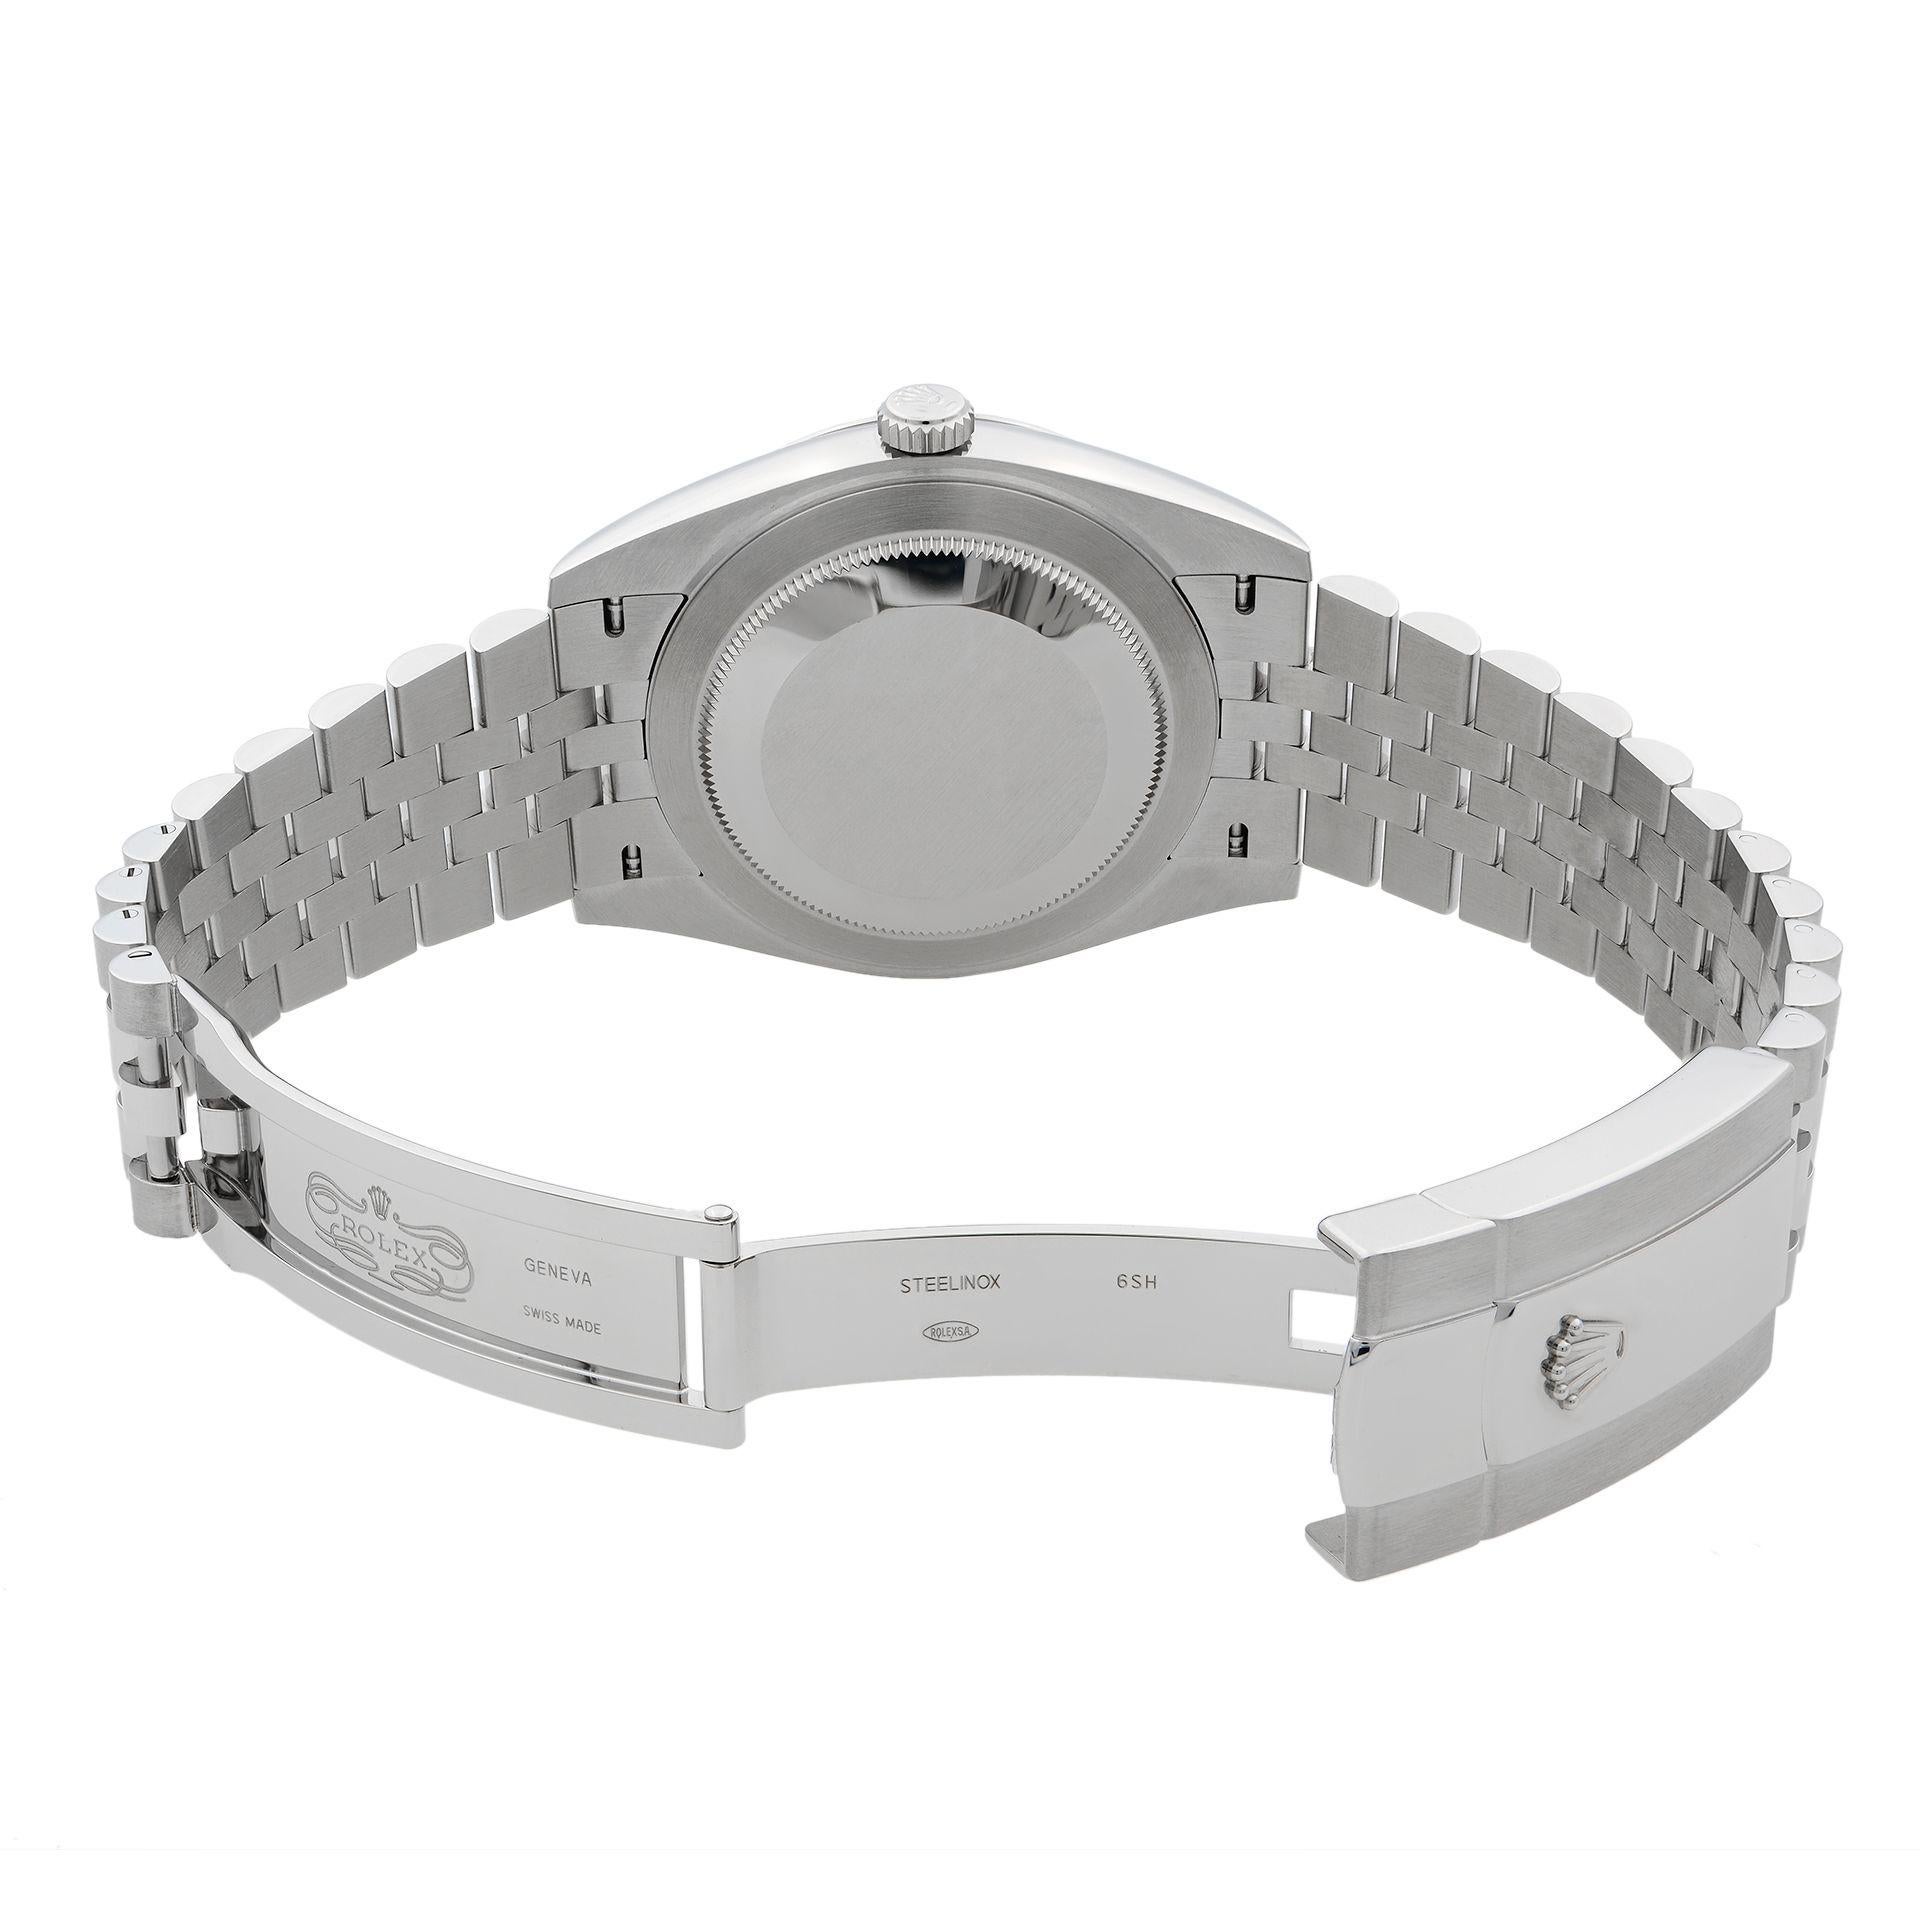 Rolex Datejust 41 Stainless Steel Black Dial Automatic Men's Watch 126300 bkij 2